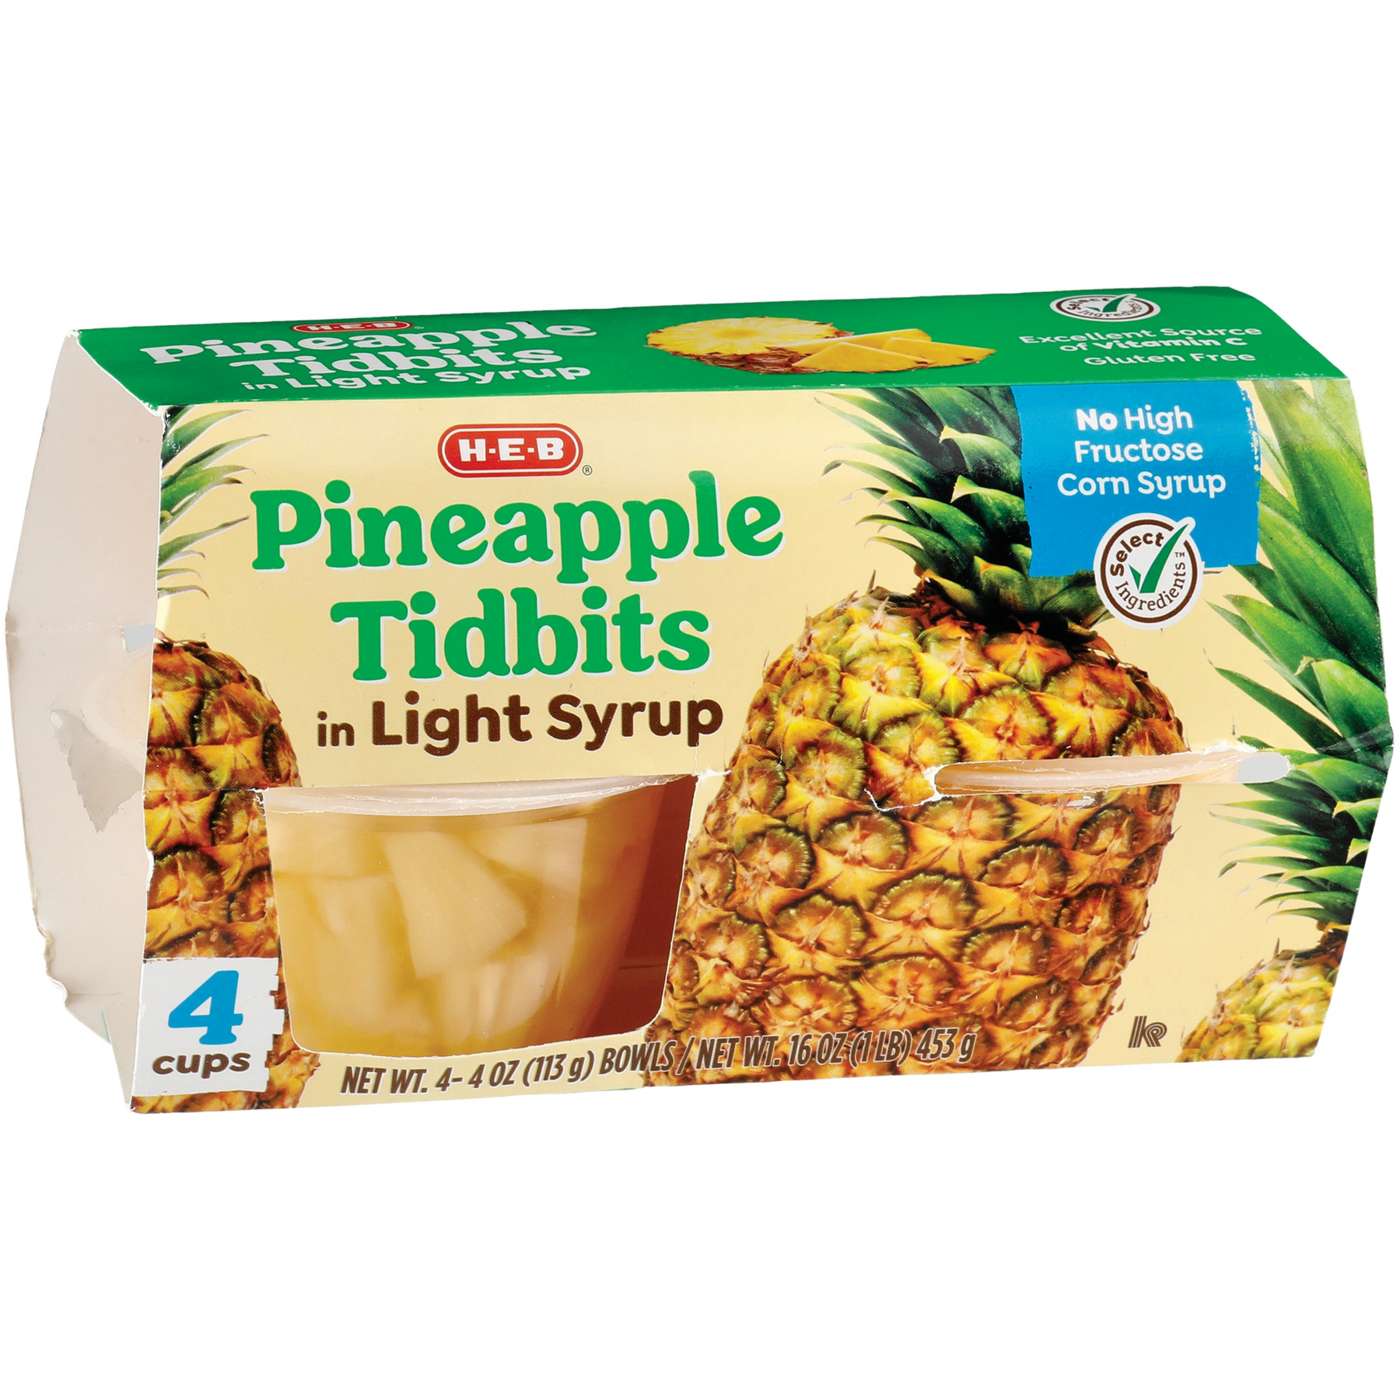 H-E-B Pineapple Tidbits Cups – Light Syrup; image 1 of 2